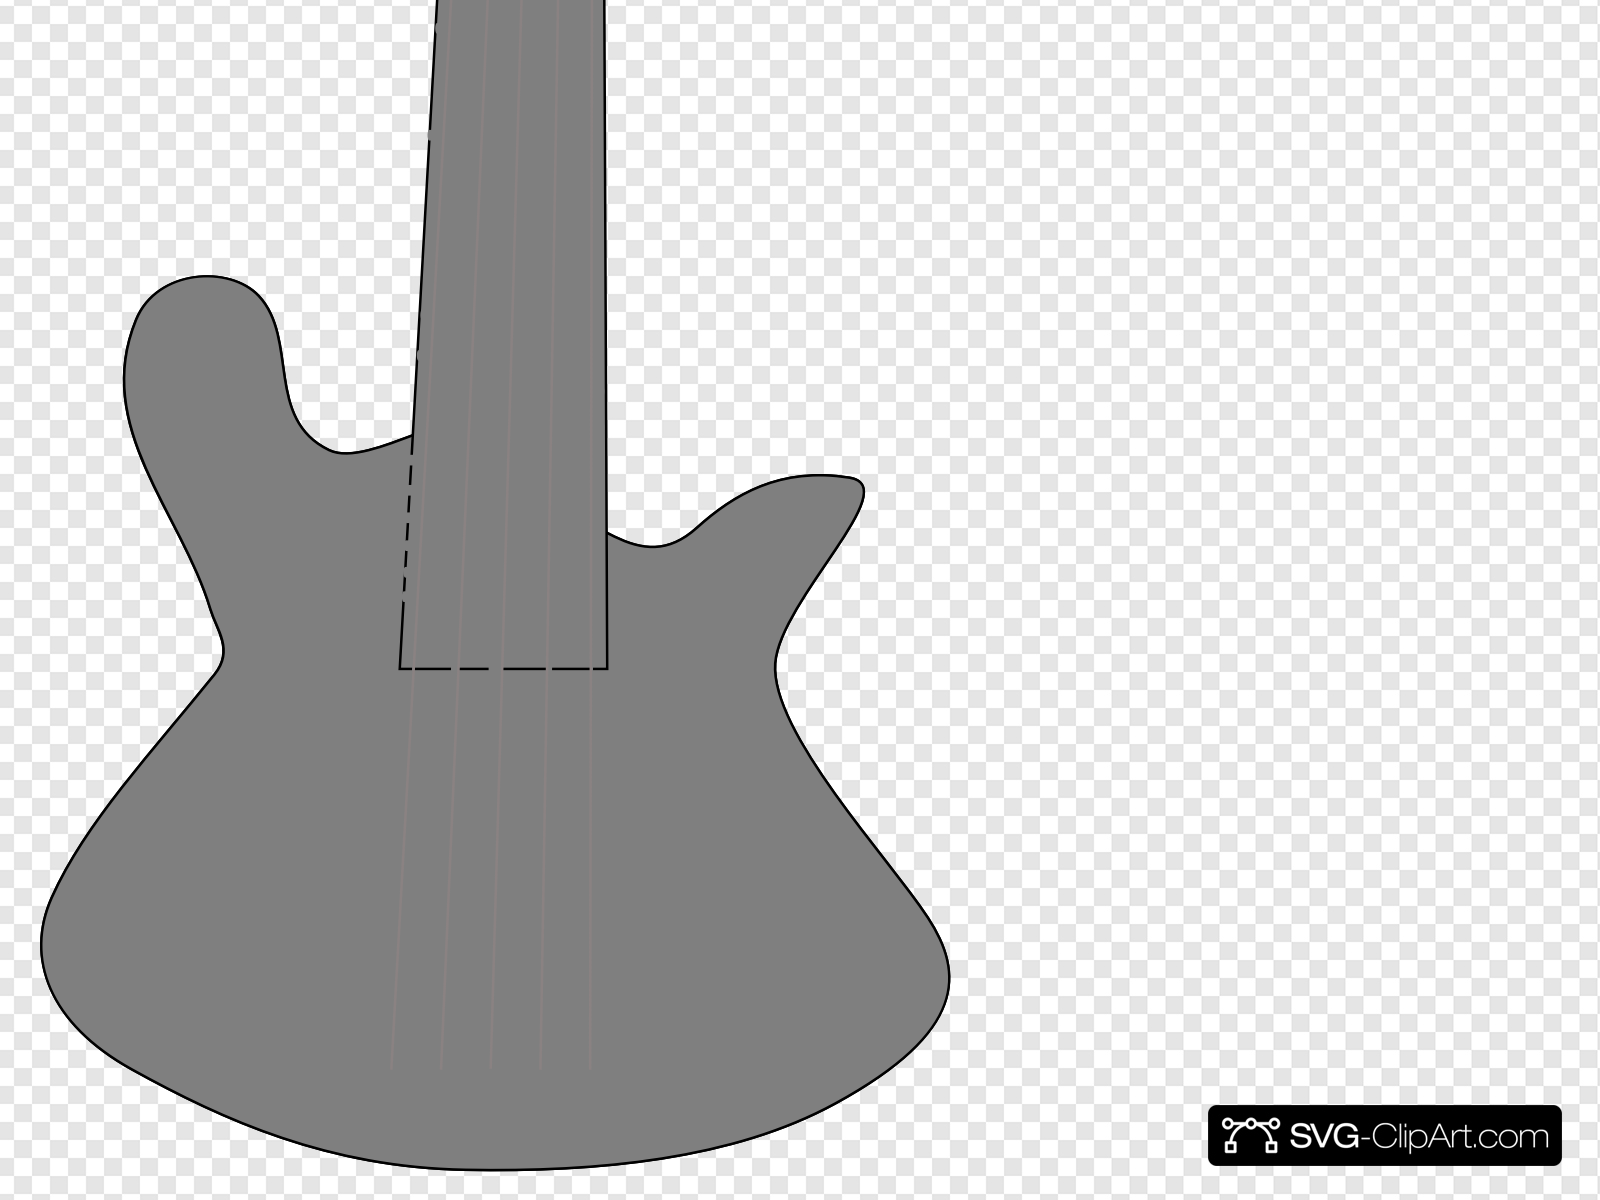 guitar clipart gray